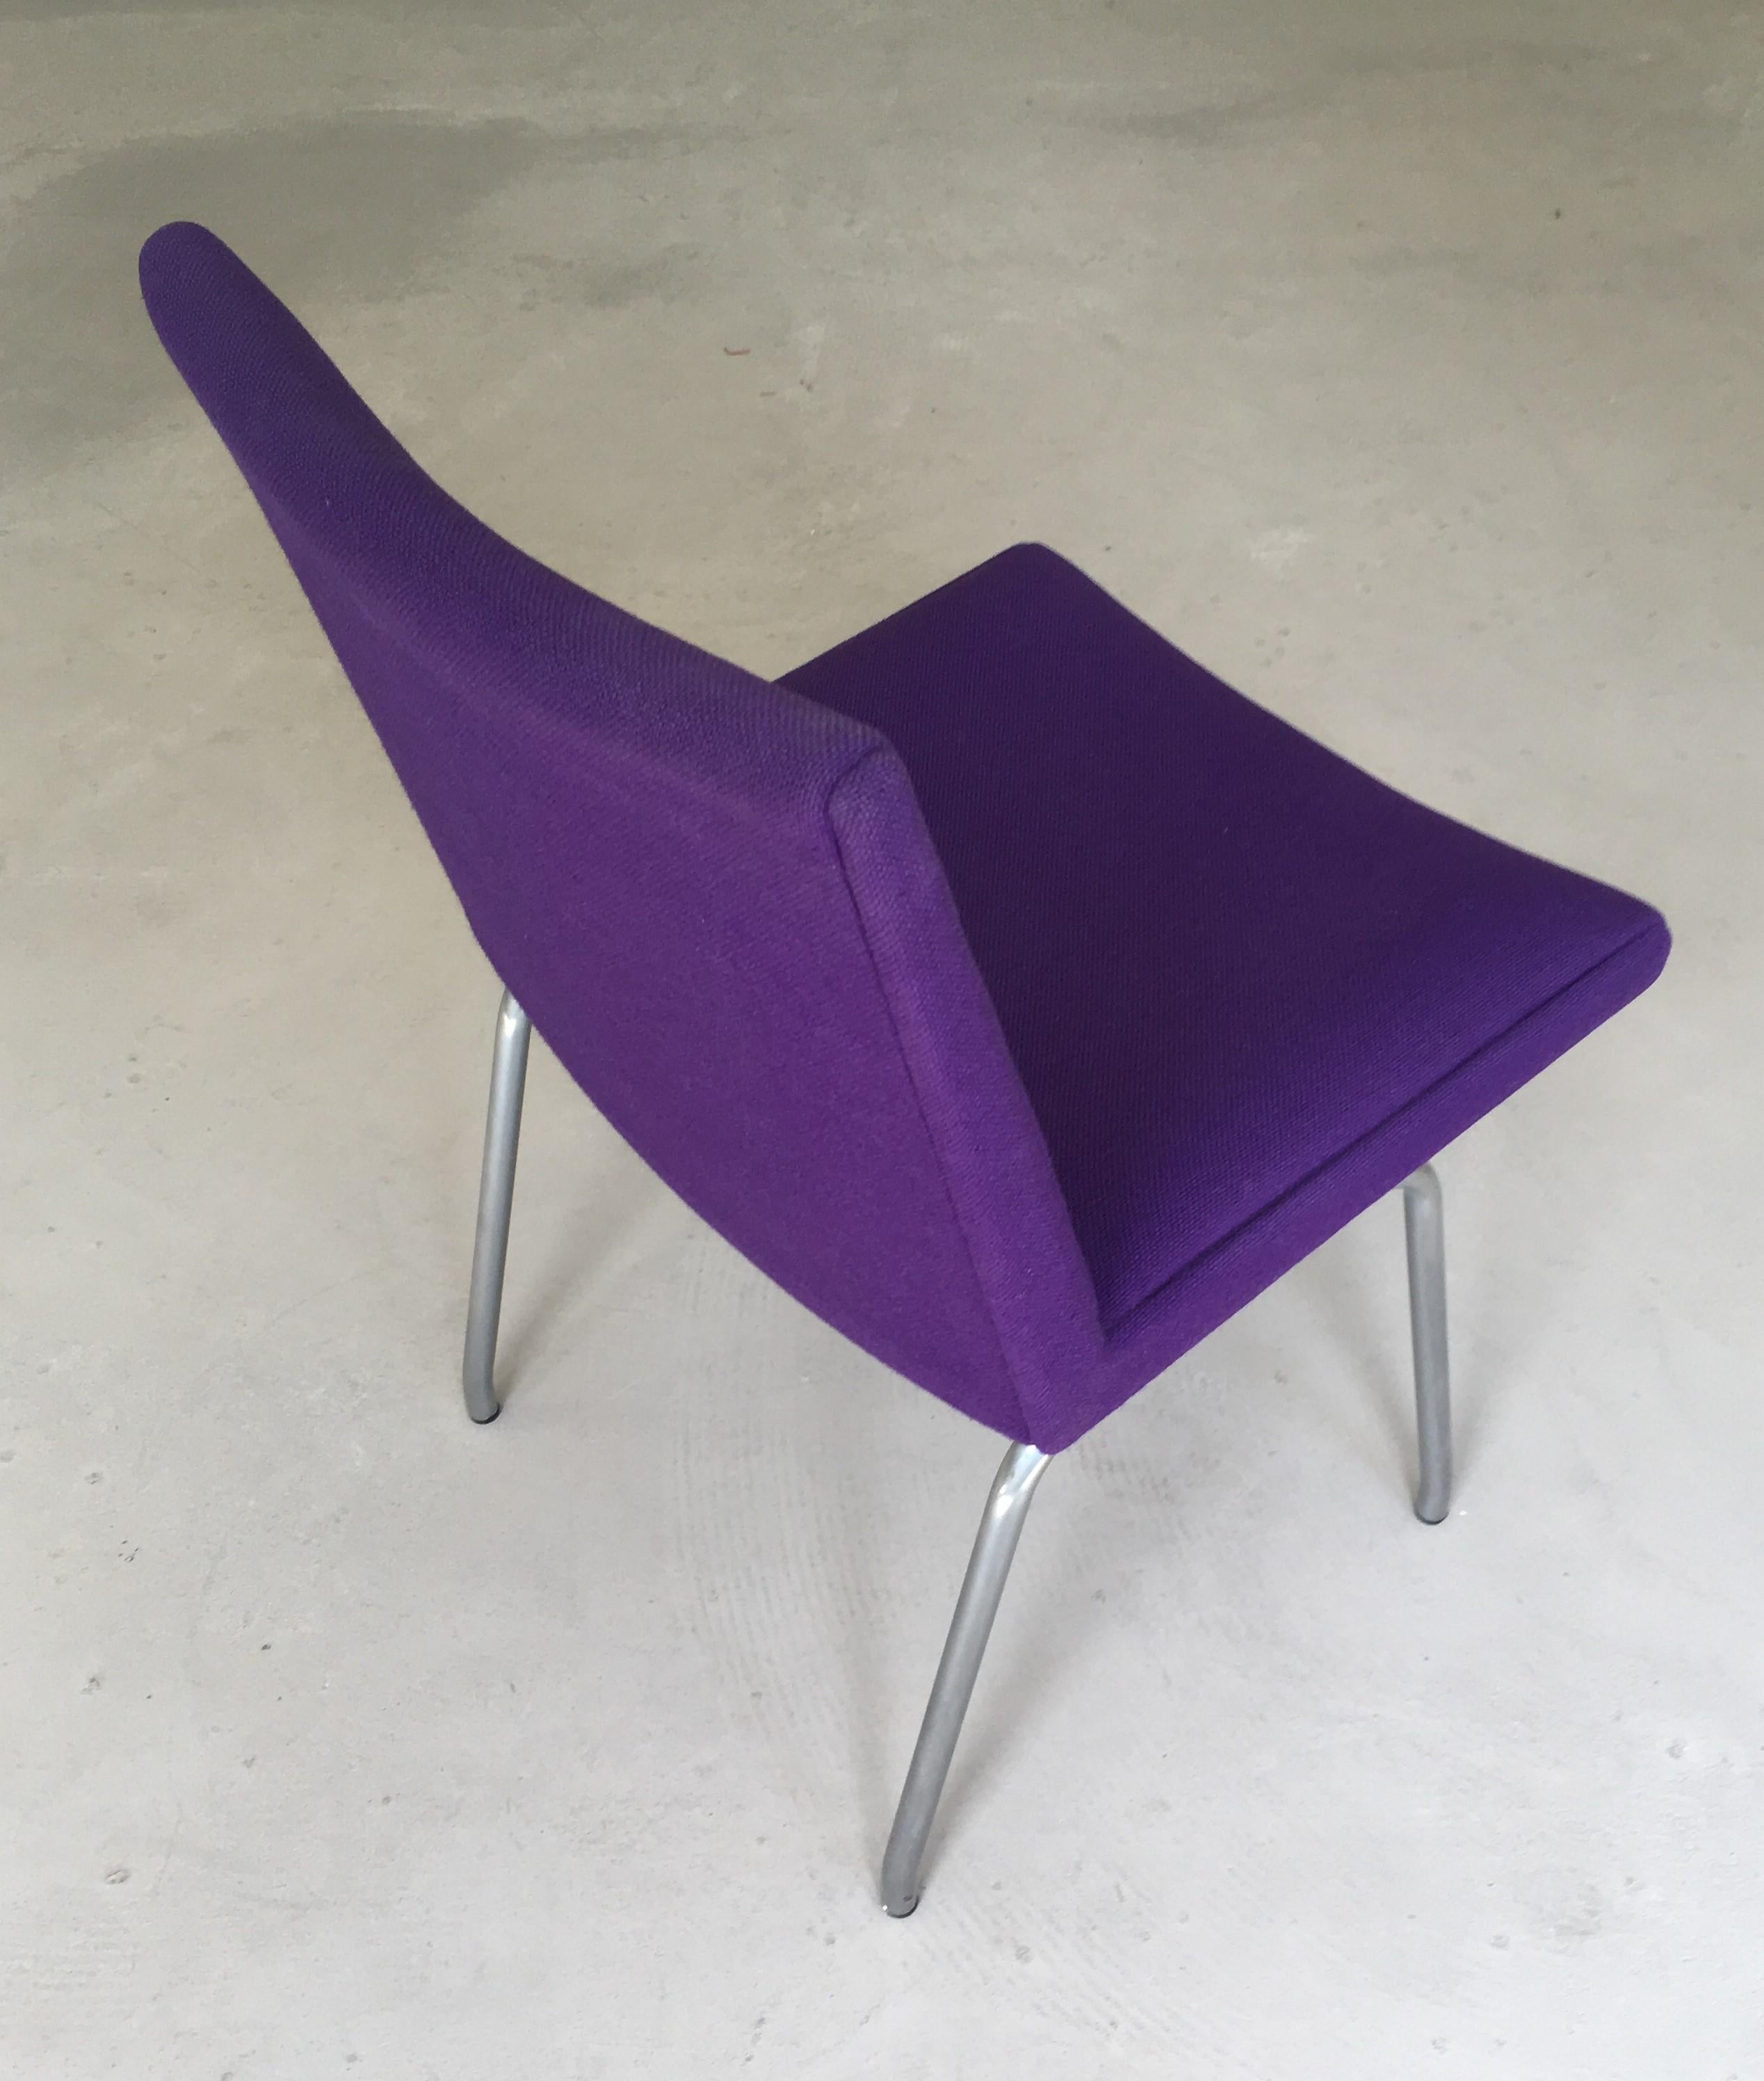 1960s Danish Hans J. Wegner Airport Chair, Reupholstered in Purple Fabric For Sale 1